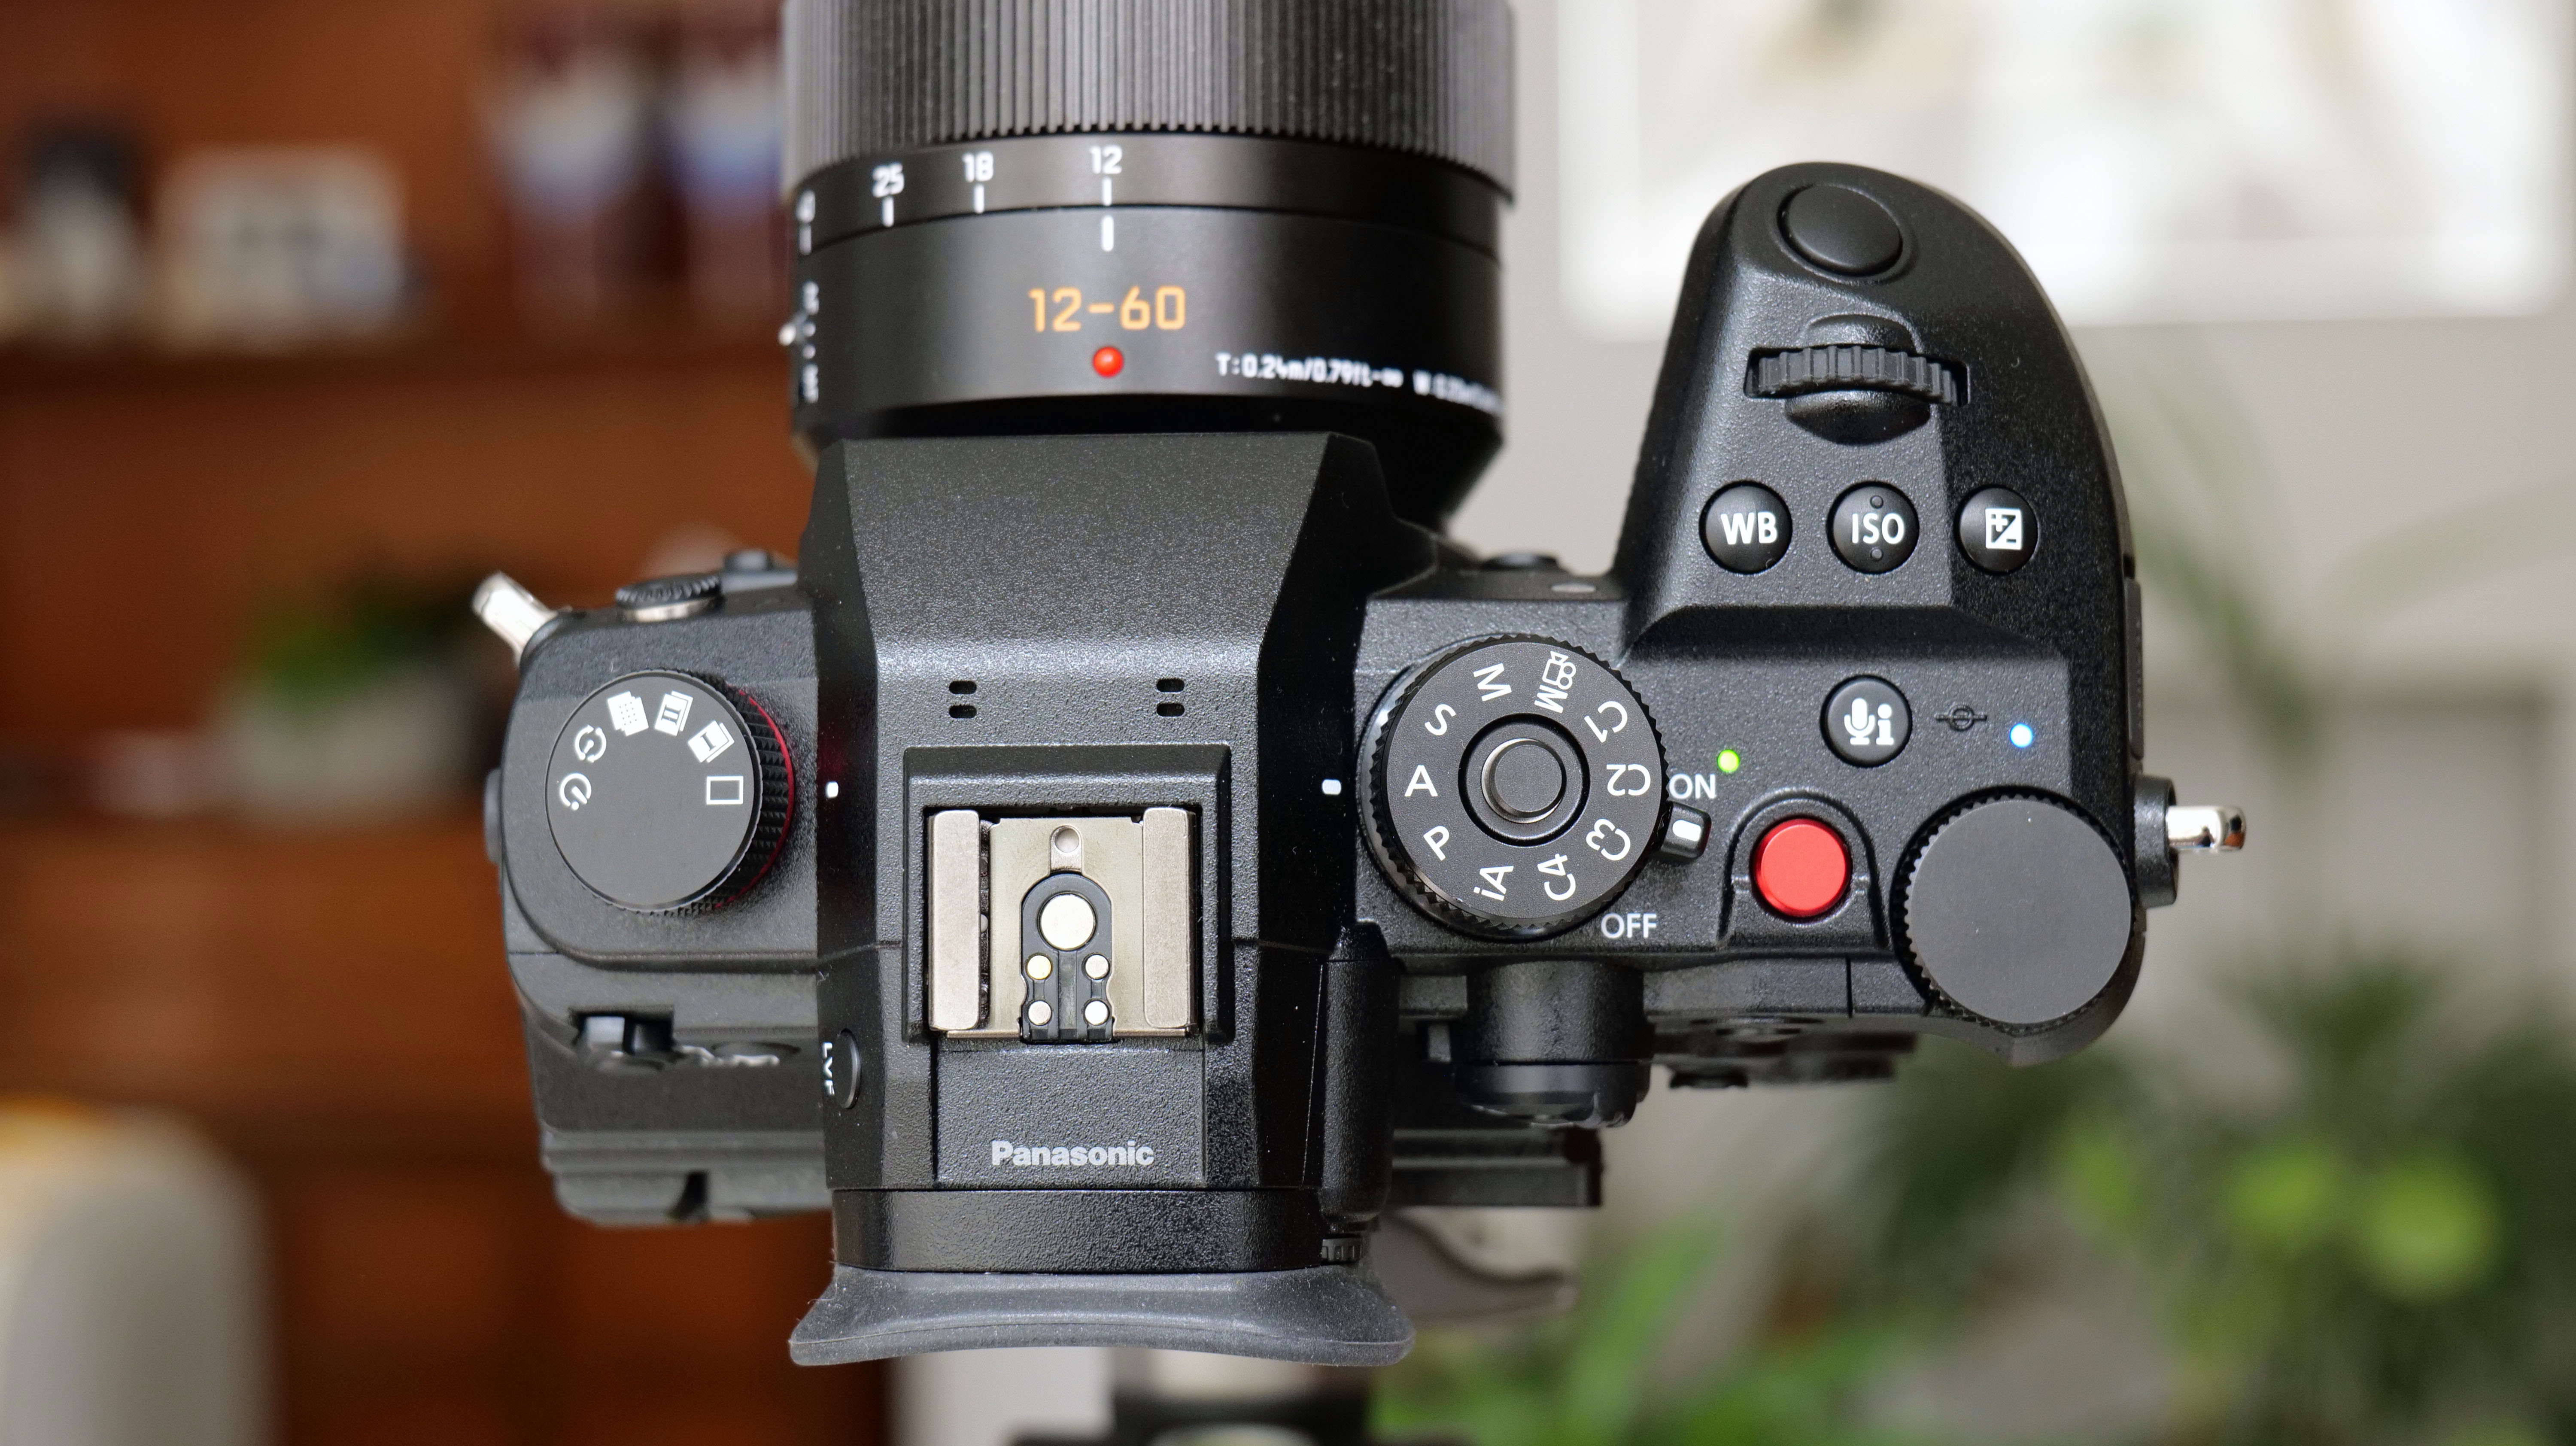 Top plate of the Panasonic Lumix GH7 camera